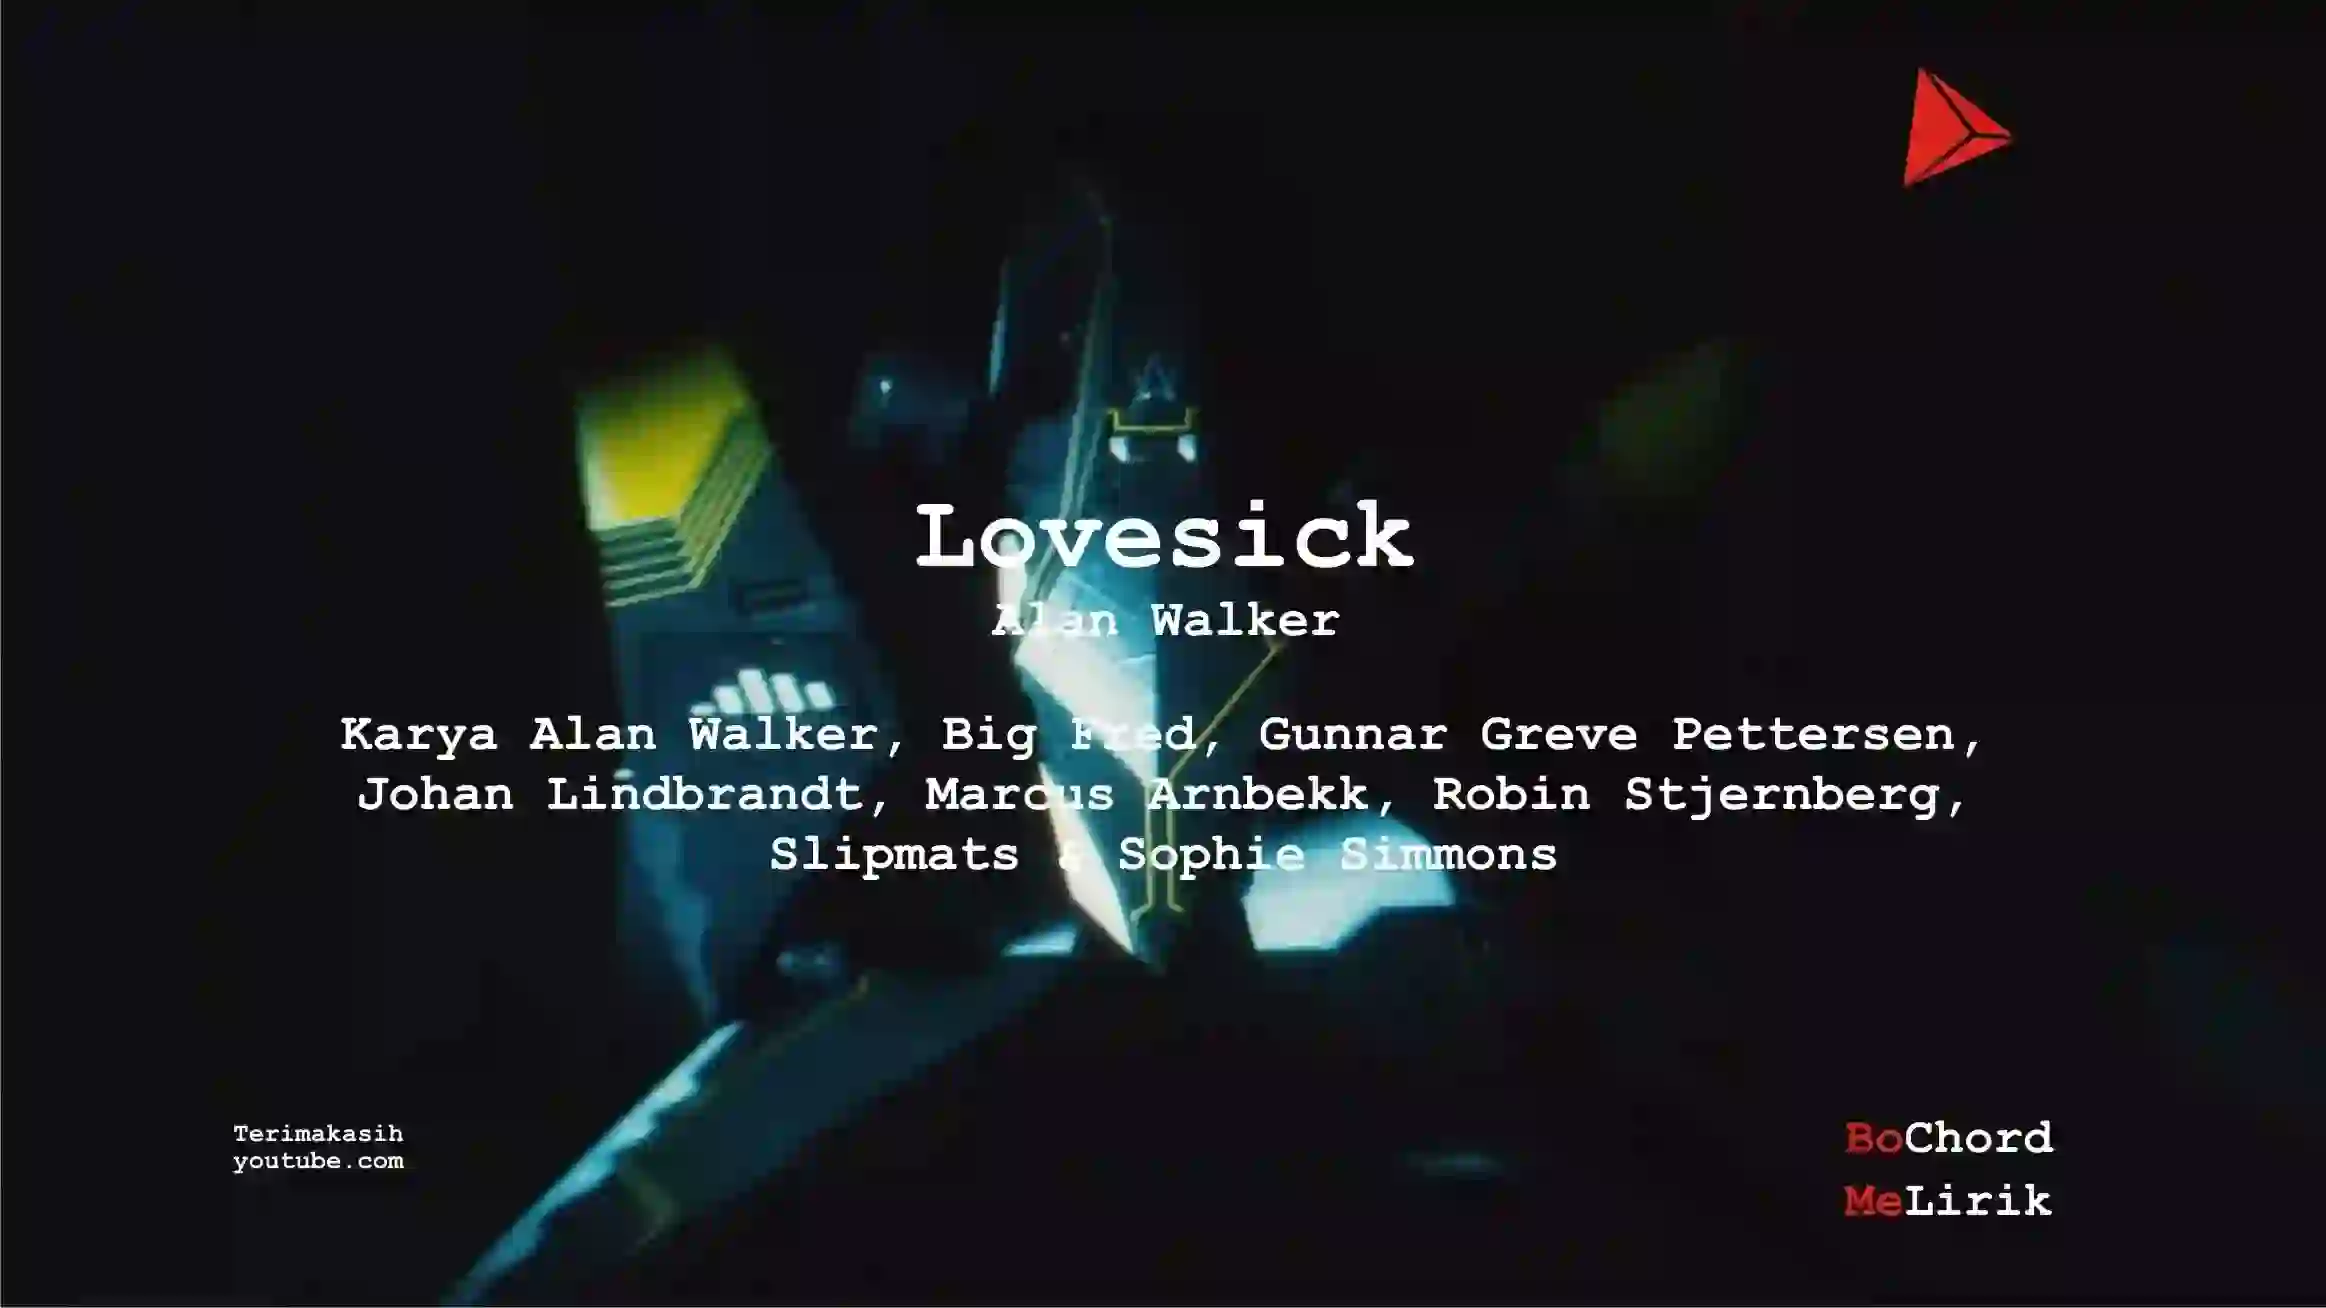 Me Lirik Lovesick | Alan Walker feat Sophie Simmons